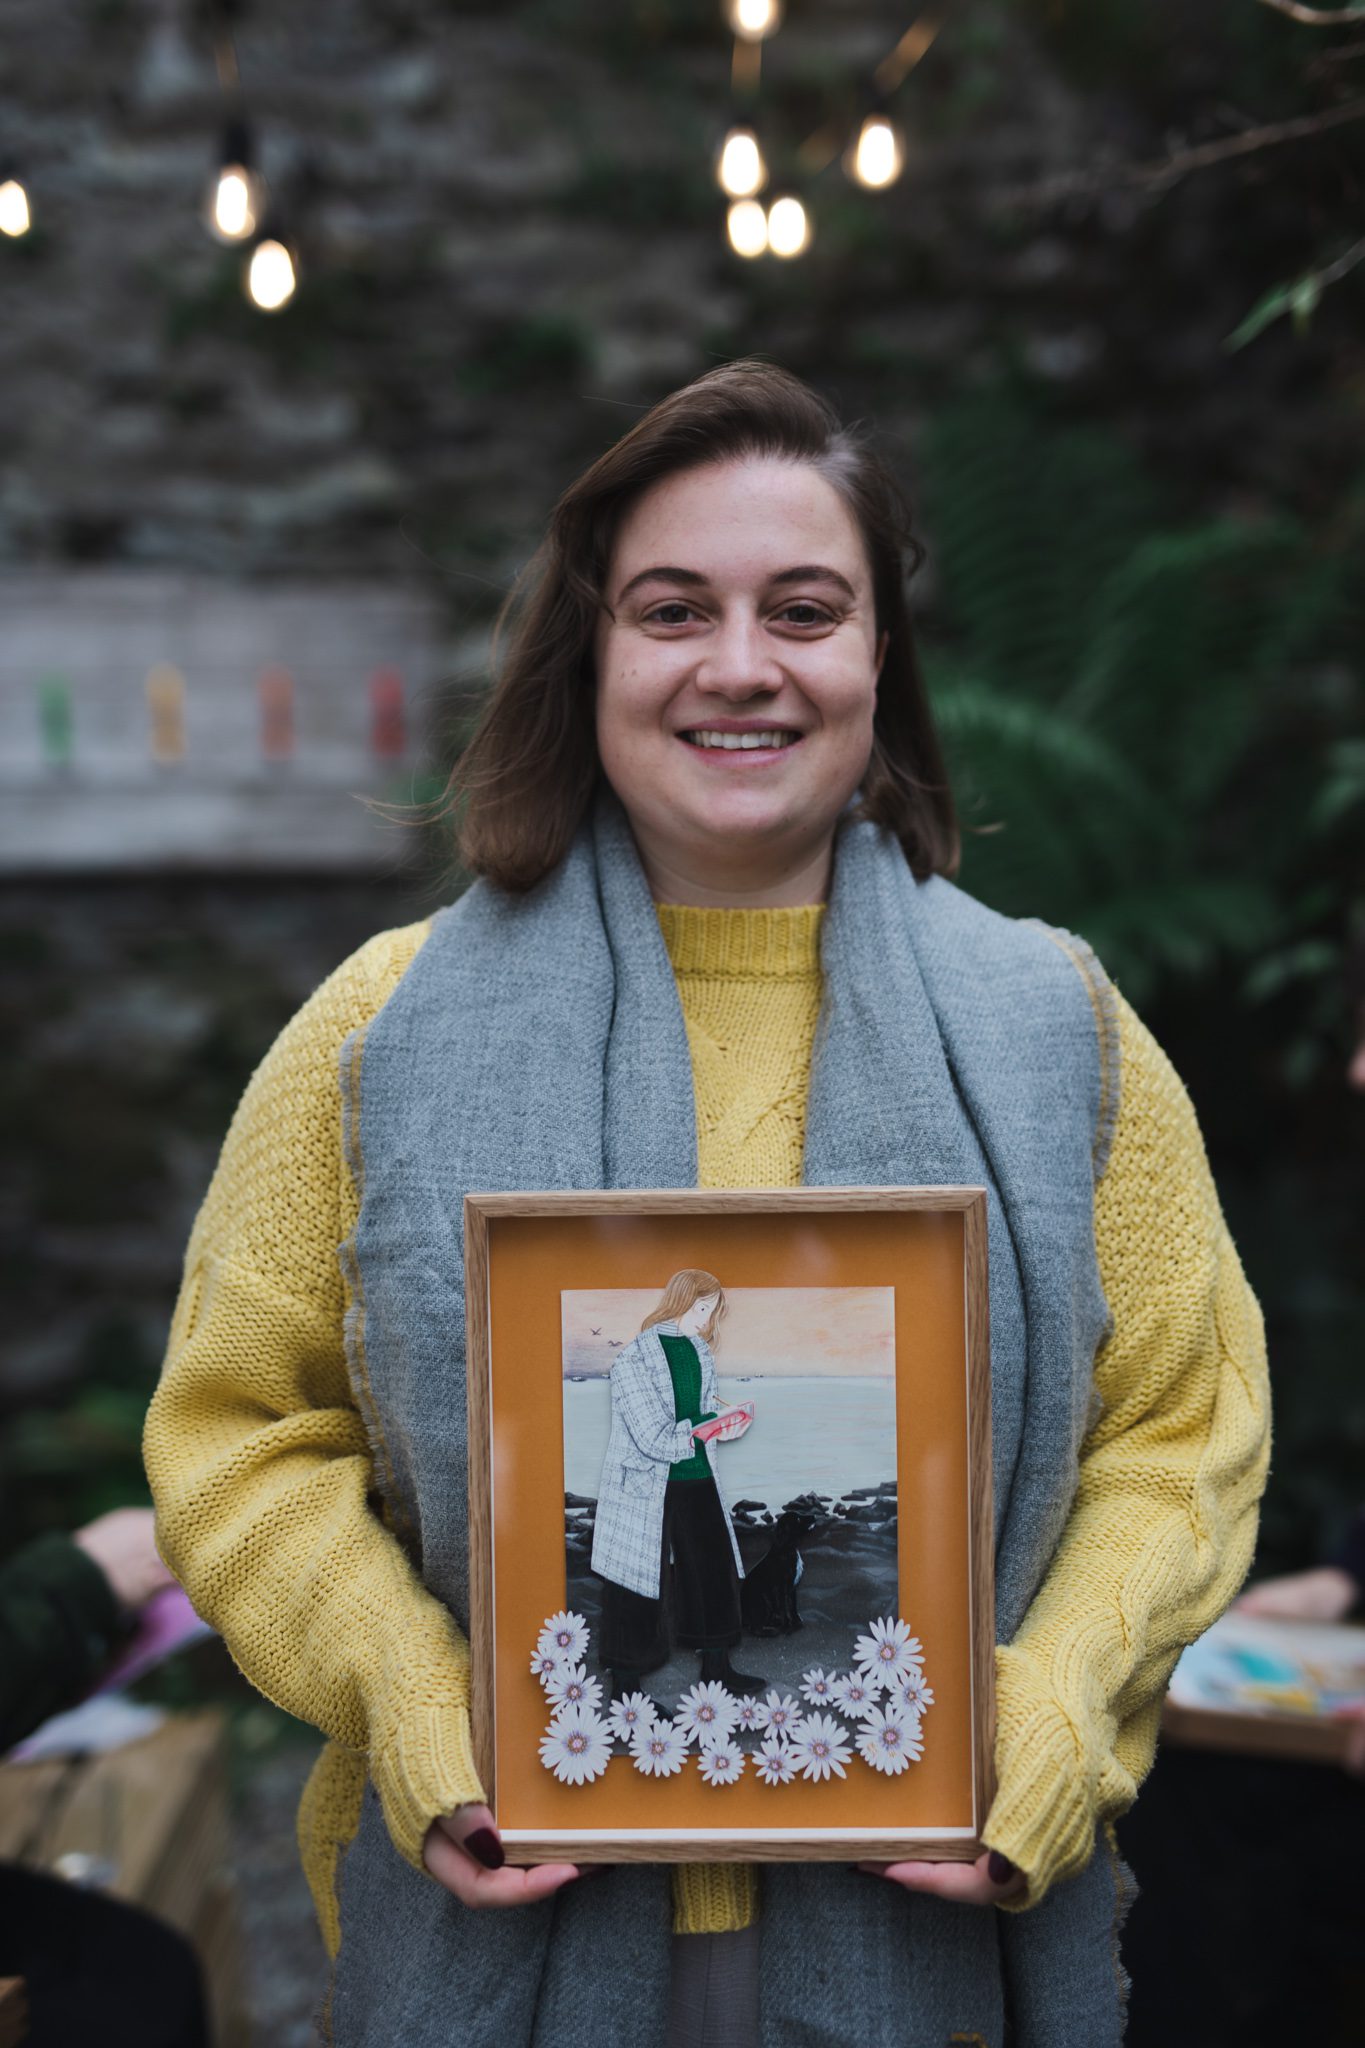 Emily holding portrait by artist Bex Bourne